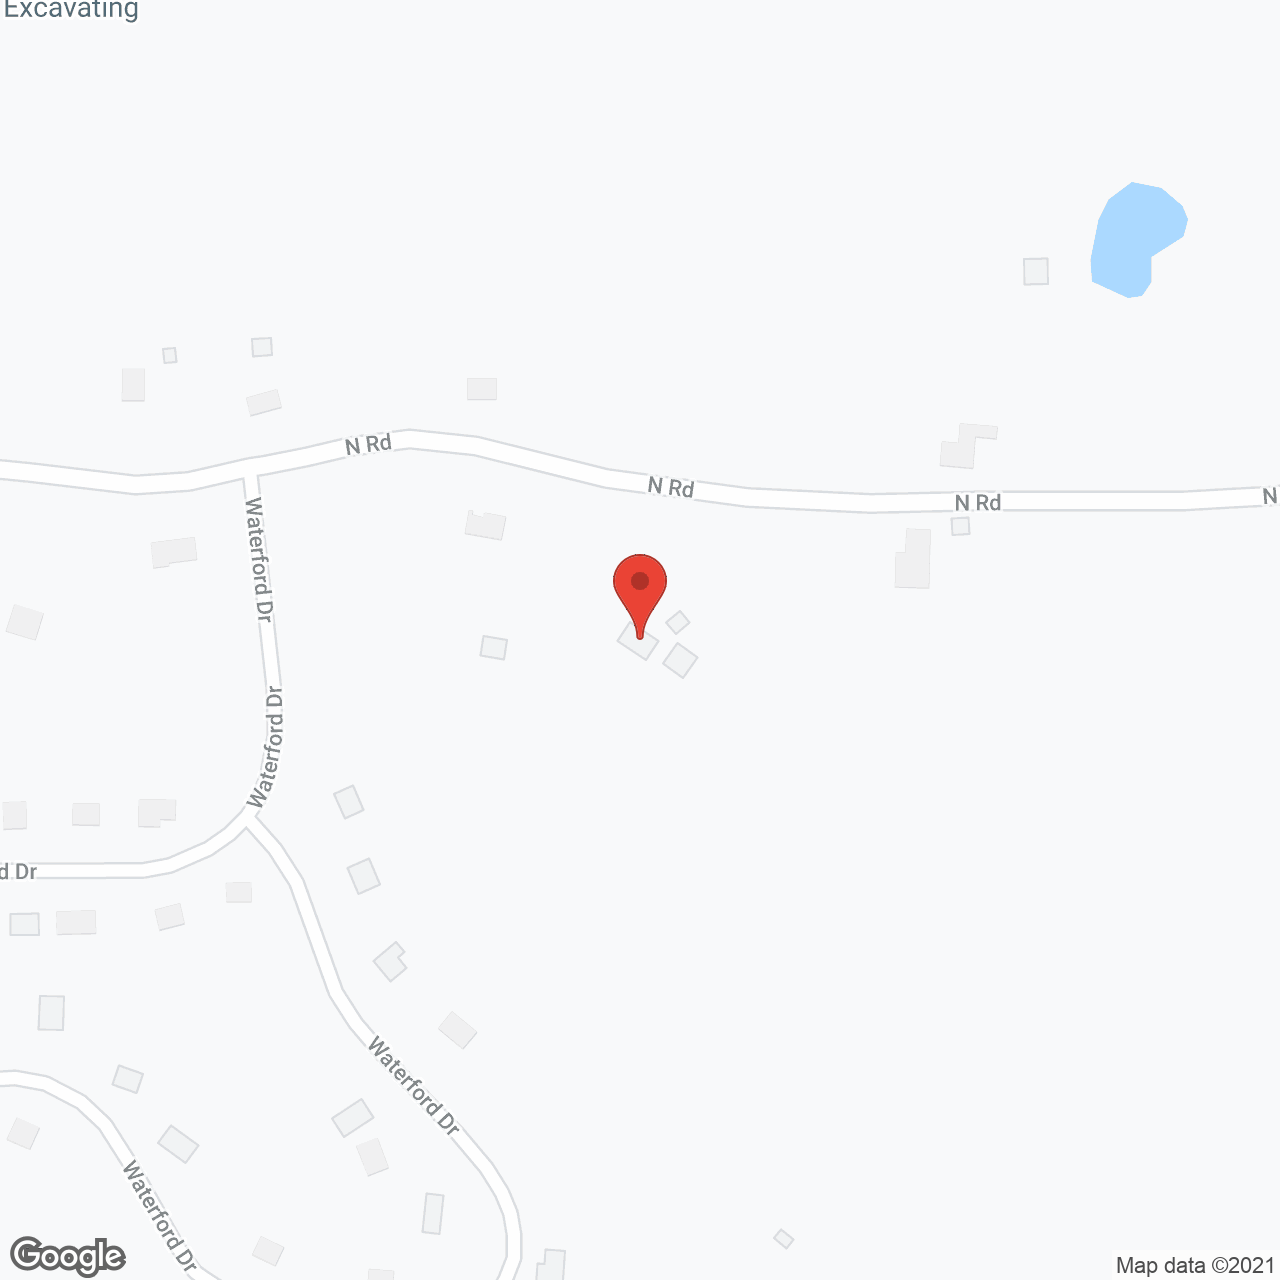 Rockingham County Nursing Home in google map